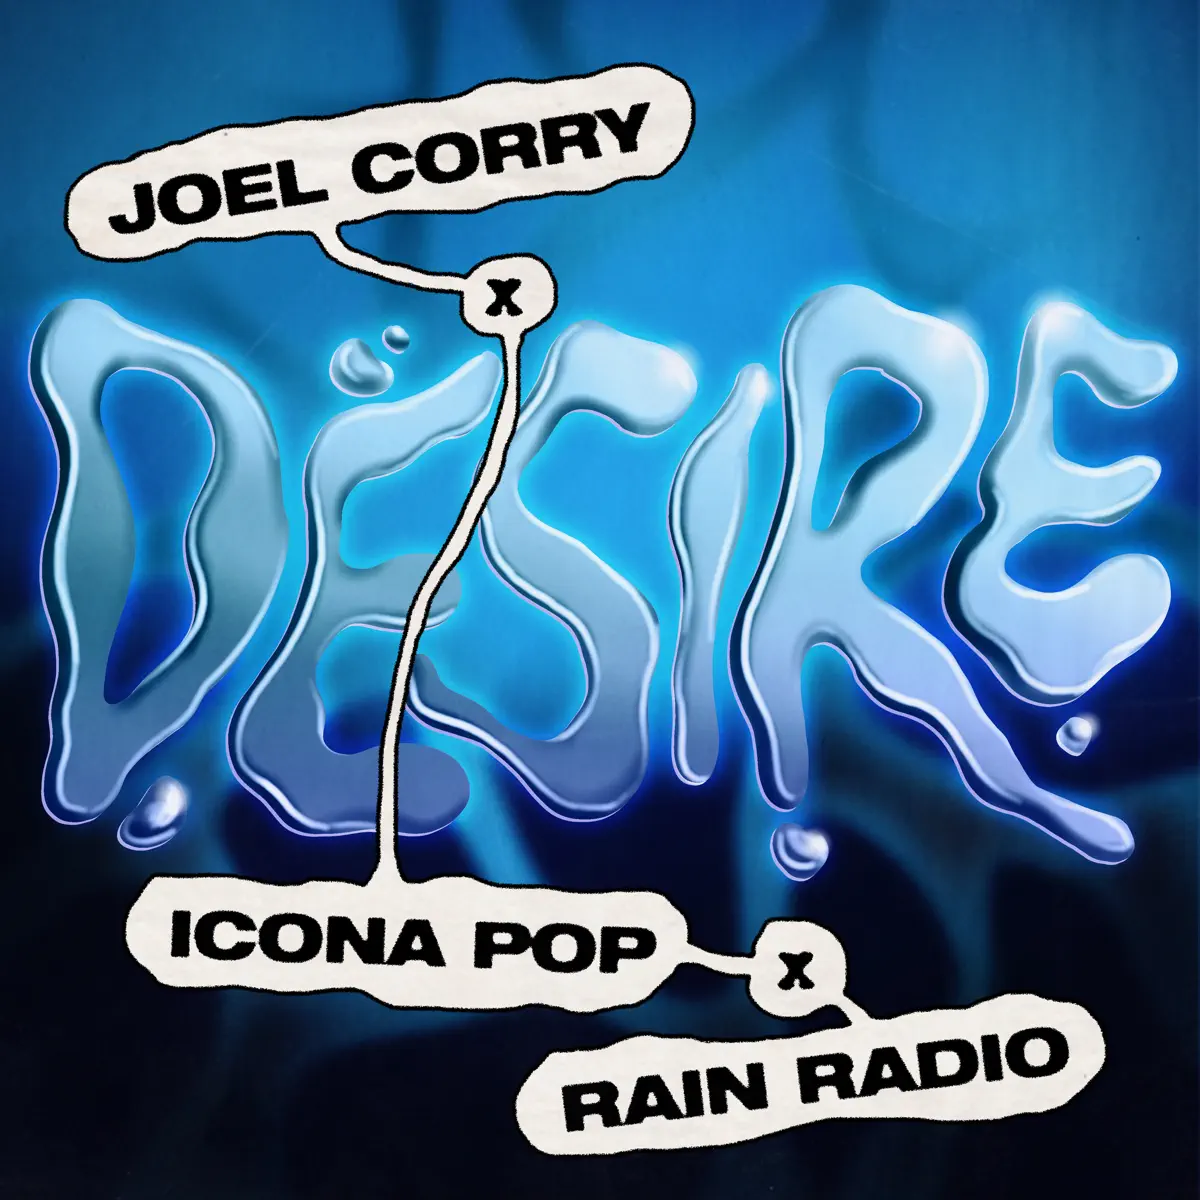 Joel Corry, Icona Pop & Rain Radio - Desire - Single (2023) [iTunes Plus AAC M4A]-新房子